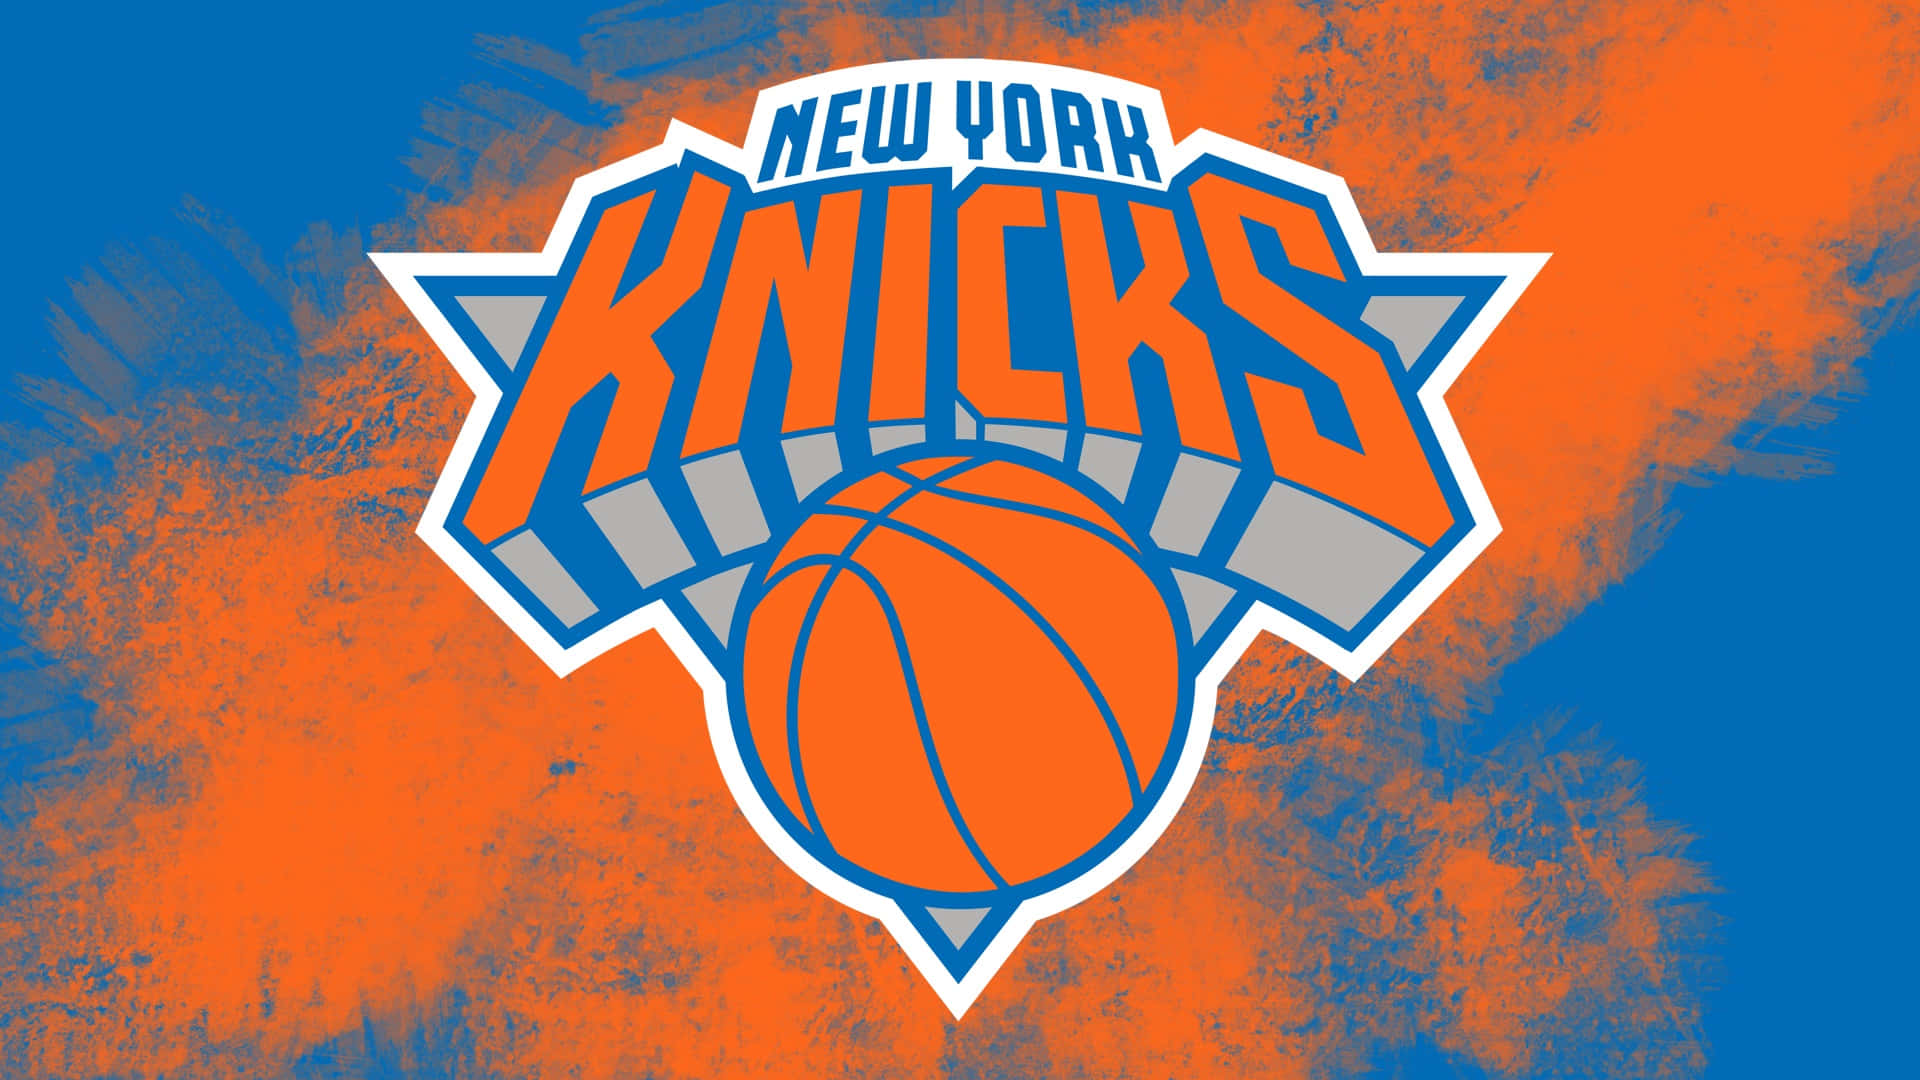 Visdin Knicks-stolthed. Wallpaper